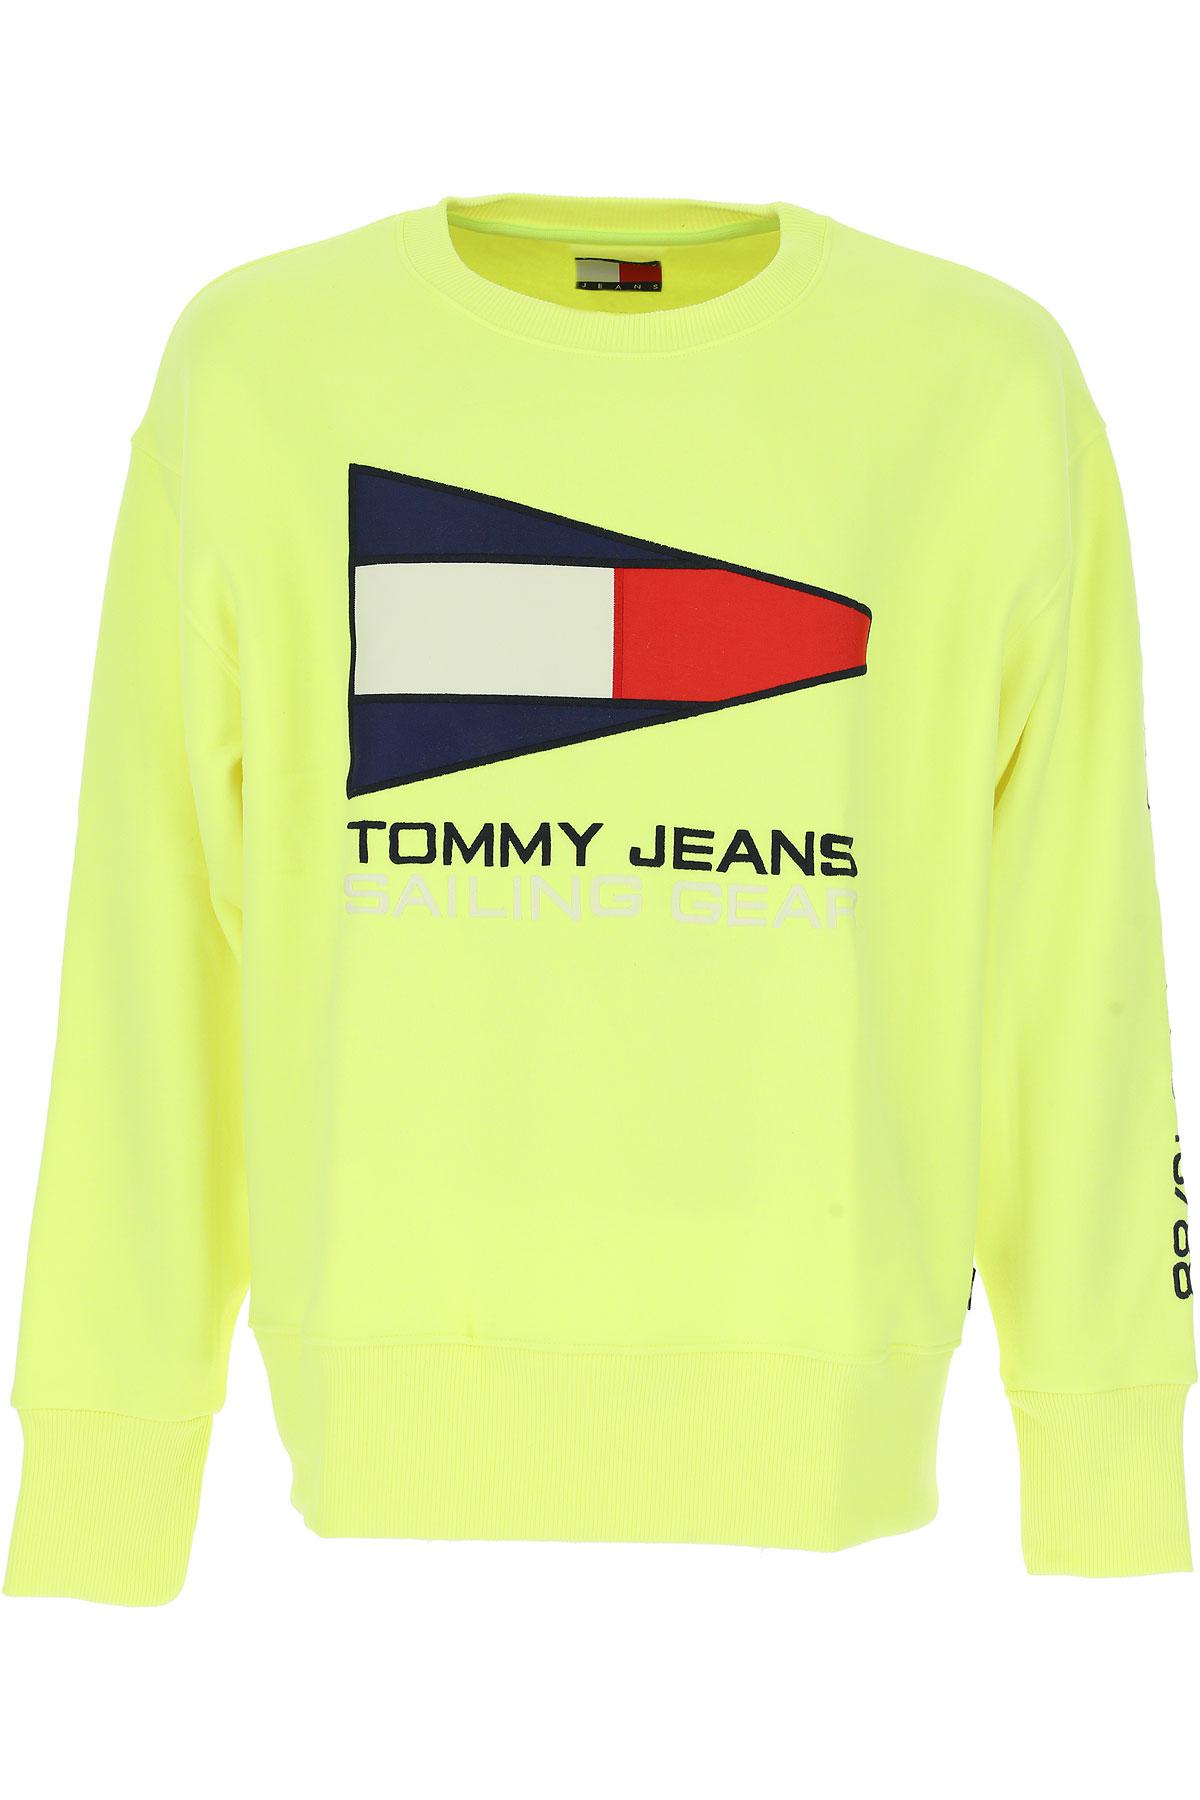 Tommy Hilfiger Sailing Sweatshirt Hot Sale, 58% OFF | www.slyderstavern.com